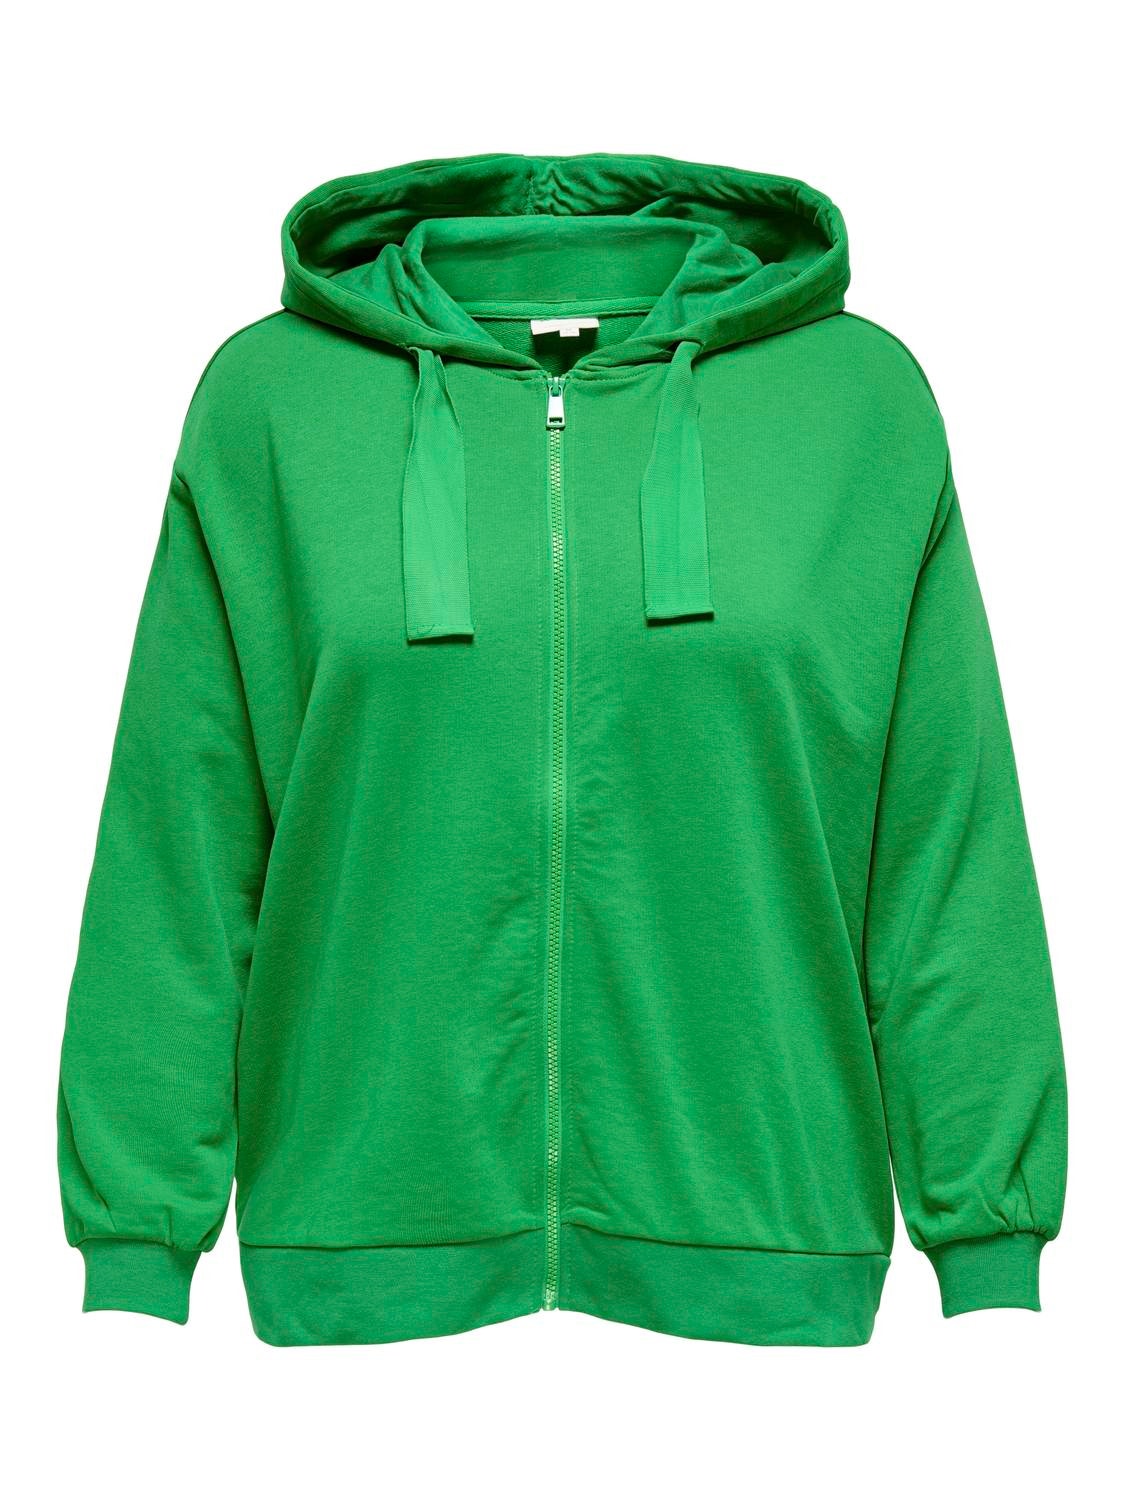 ONLY Curvy hoodie -Green Bee - 15315773